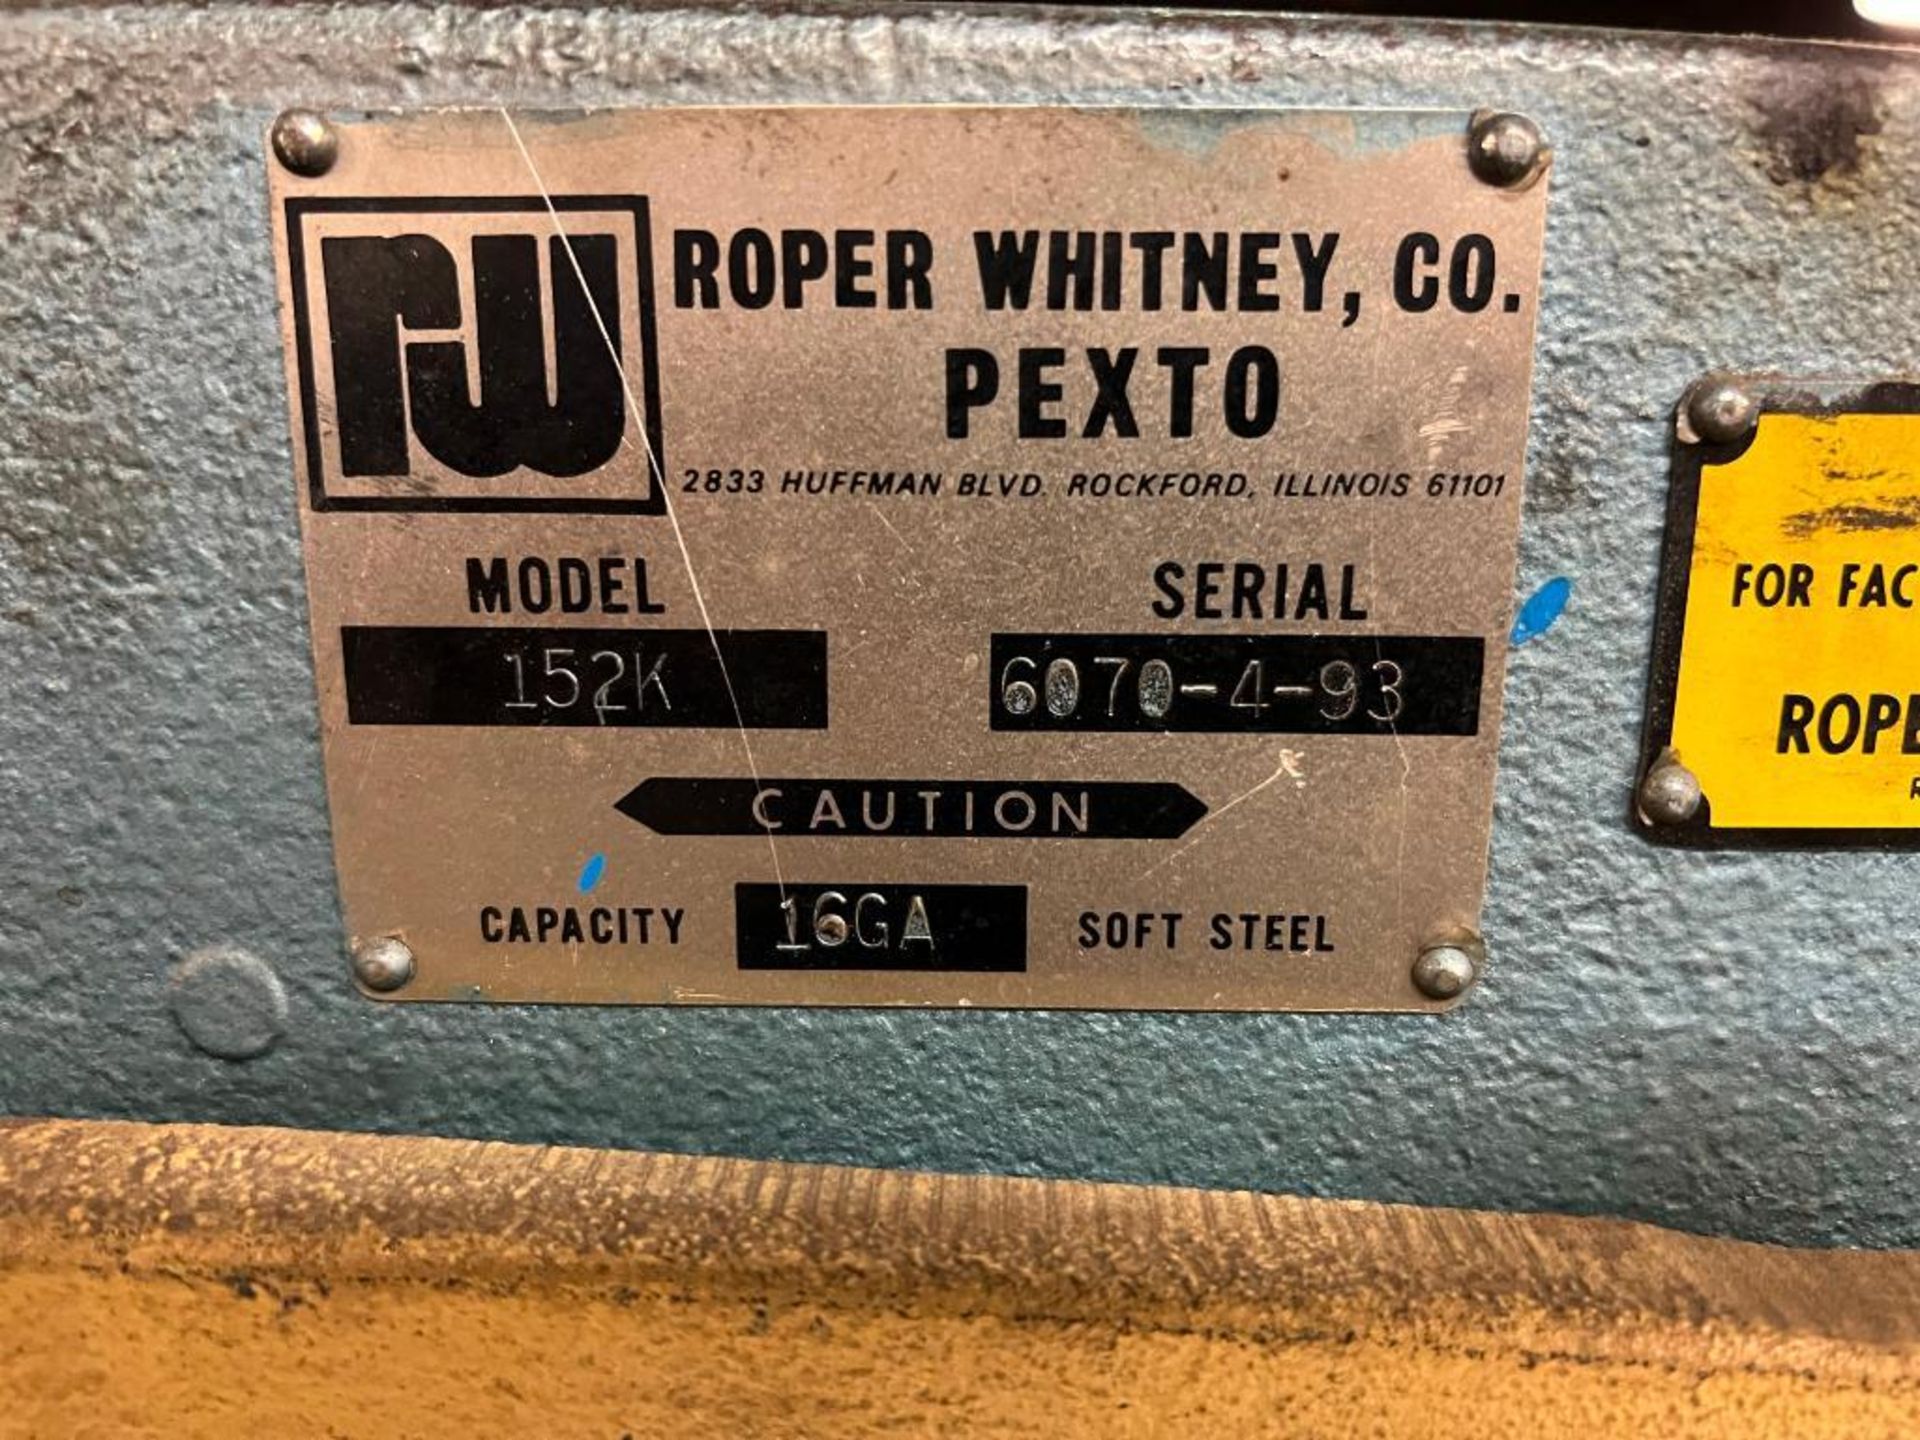 Roper Whitney Pexto Shear Model 1524, S/N 6070-4-93, 16 GA Capacity - Image 2 of 5